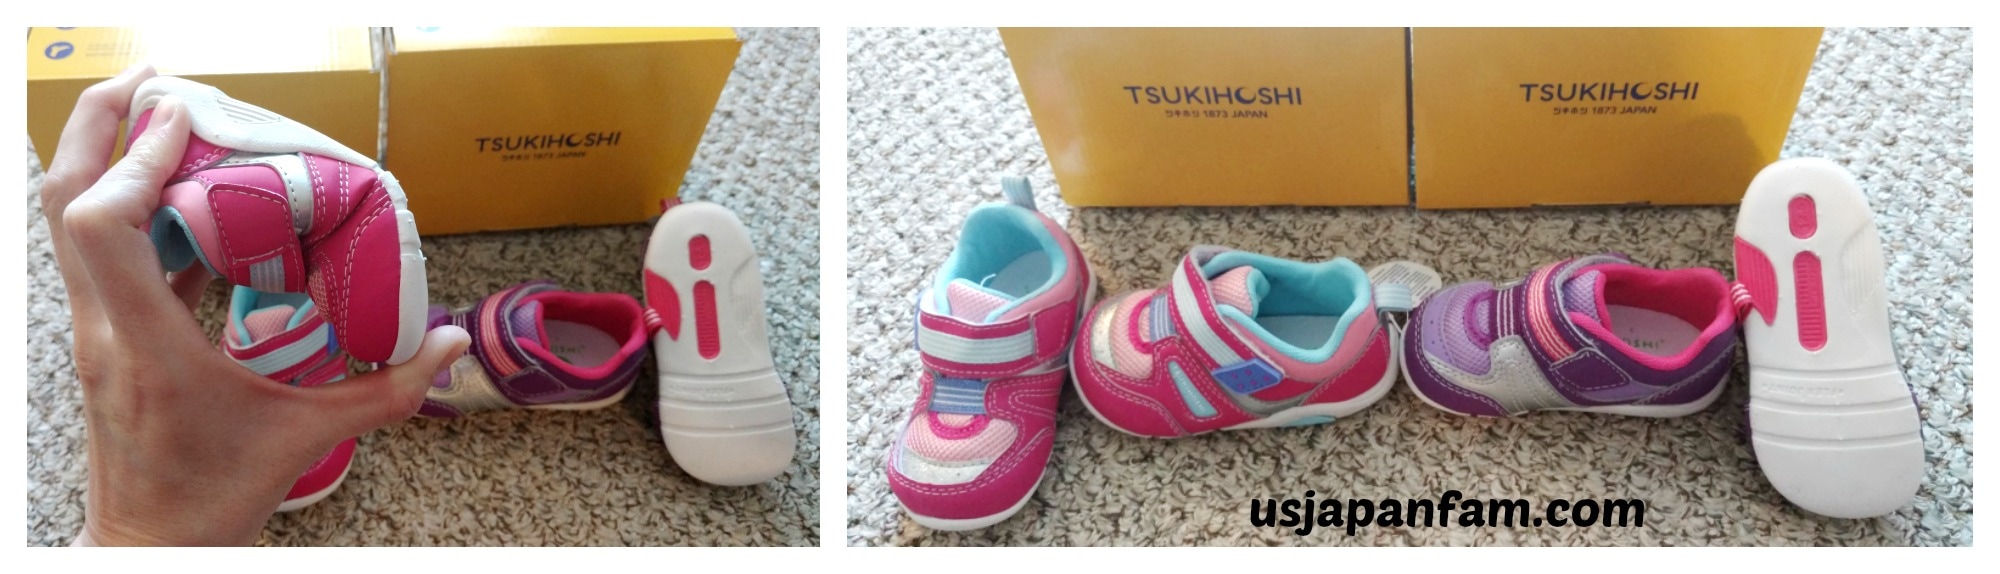 US Japan Fam reviews Tsukihoshi's Neko kids shoes.